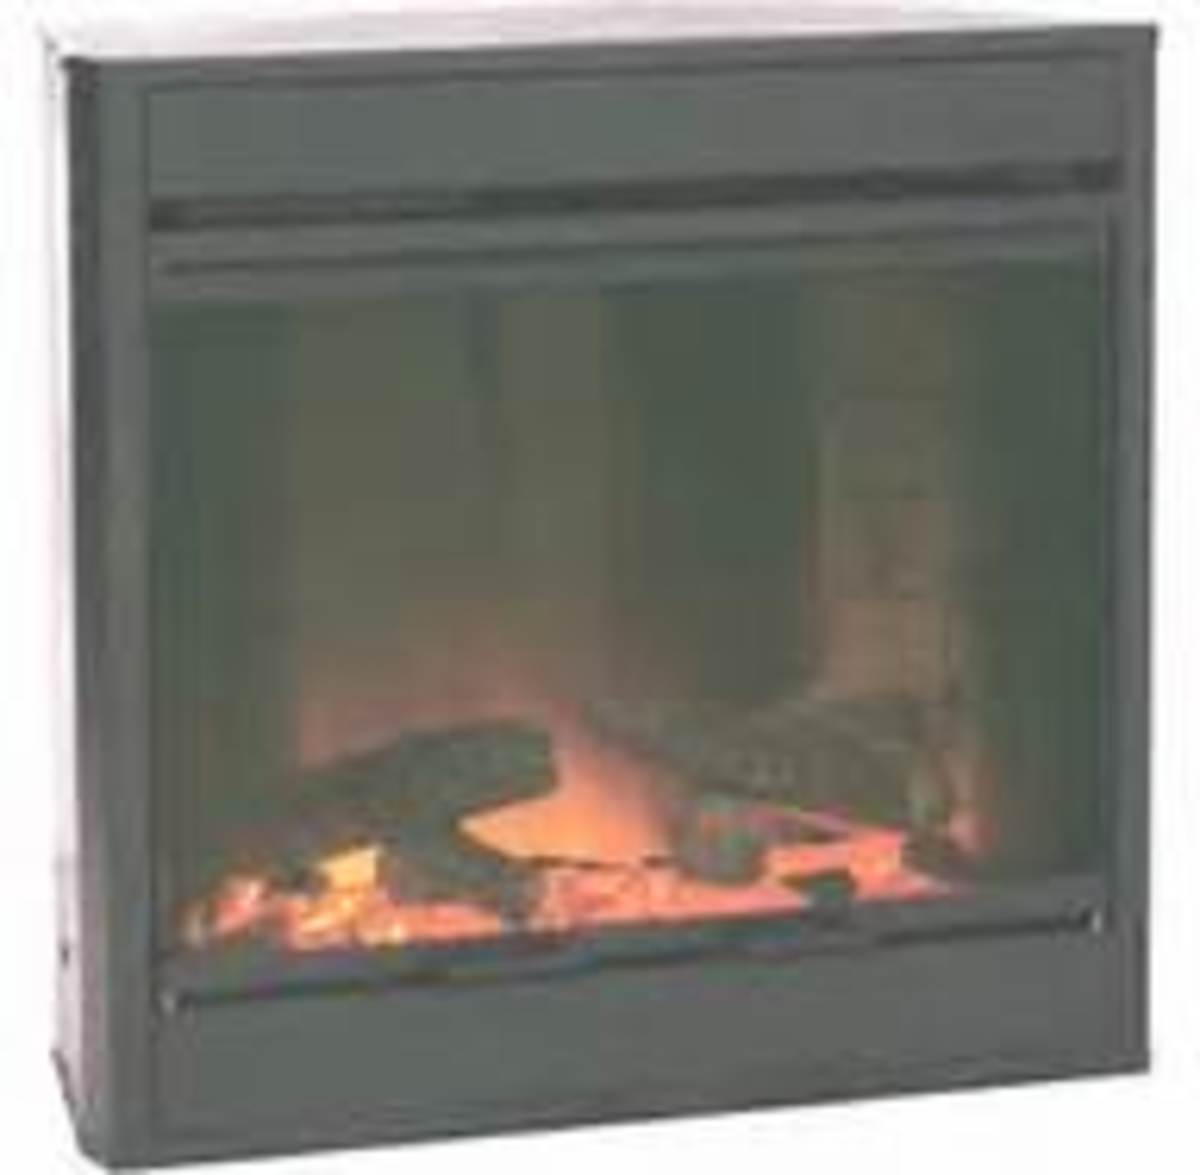 Monessen EF300 ( & EF500) Built-in electric fireplace